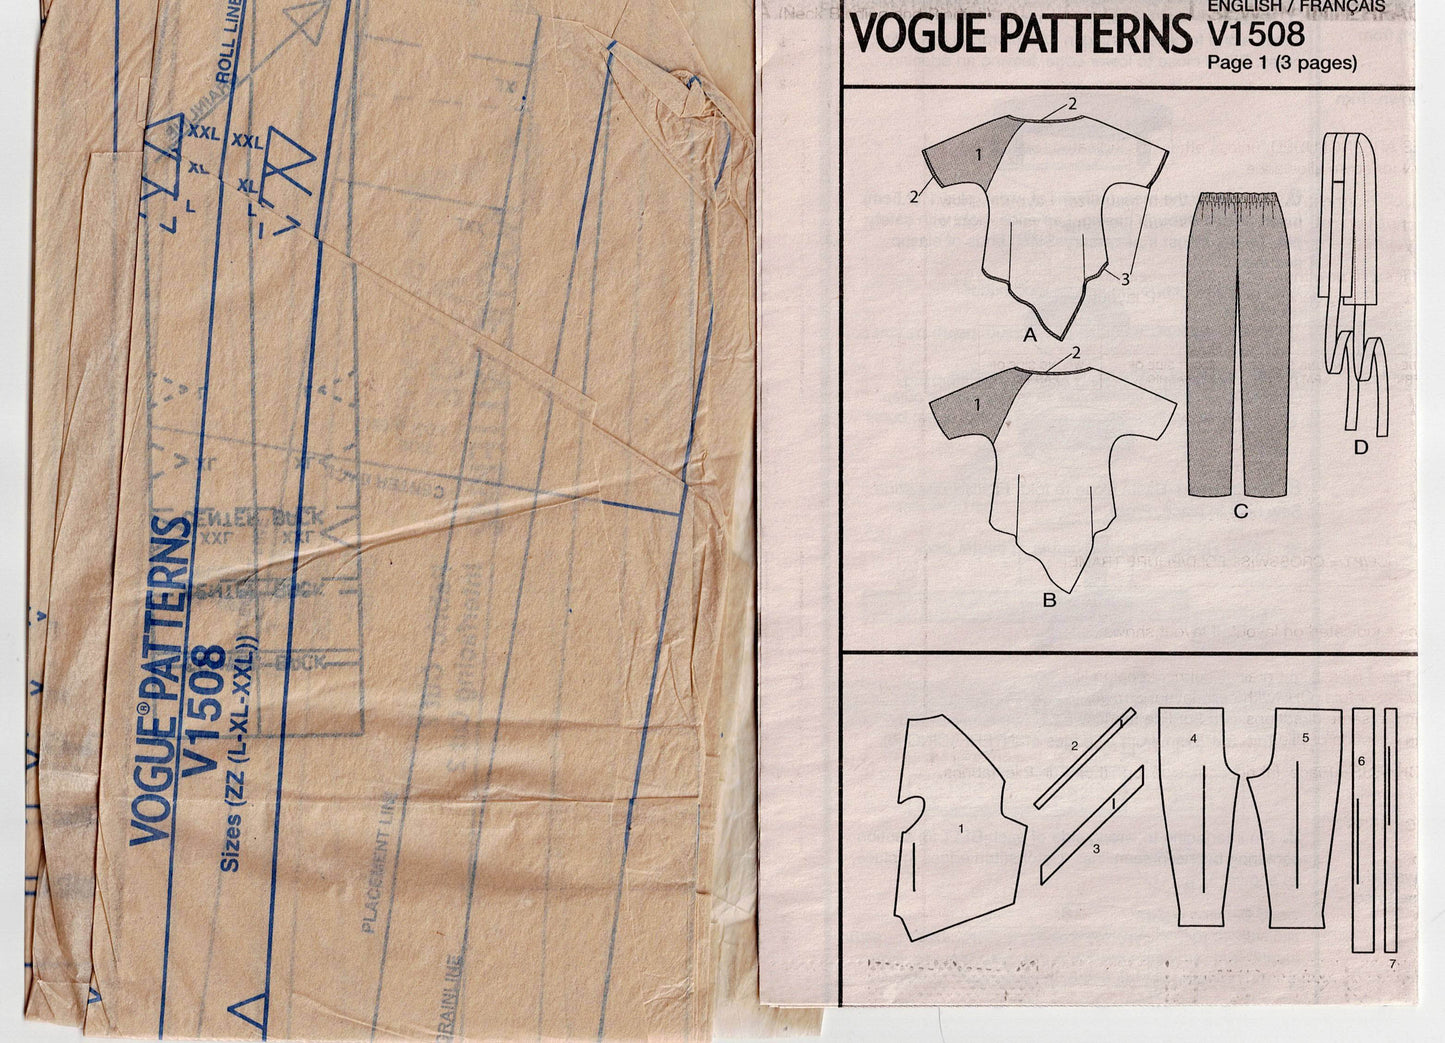 Vogue Designer Original 1508 ZANDRA RHODES Asymmetric Evening Top & Pants Out Of Print Sewing Pattern Sizes L - XL UNCUT Factory Folded